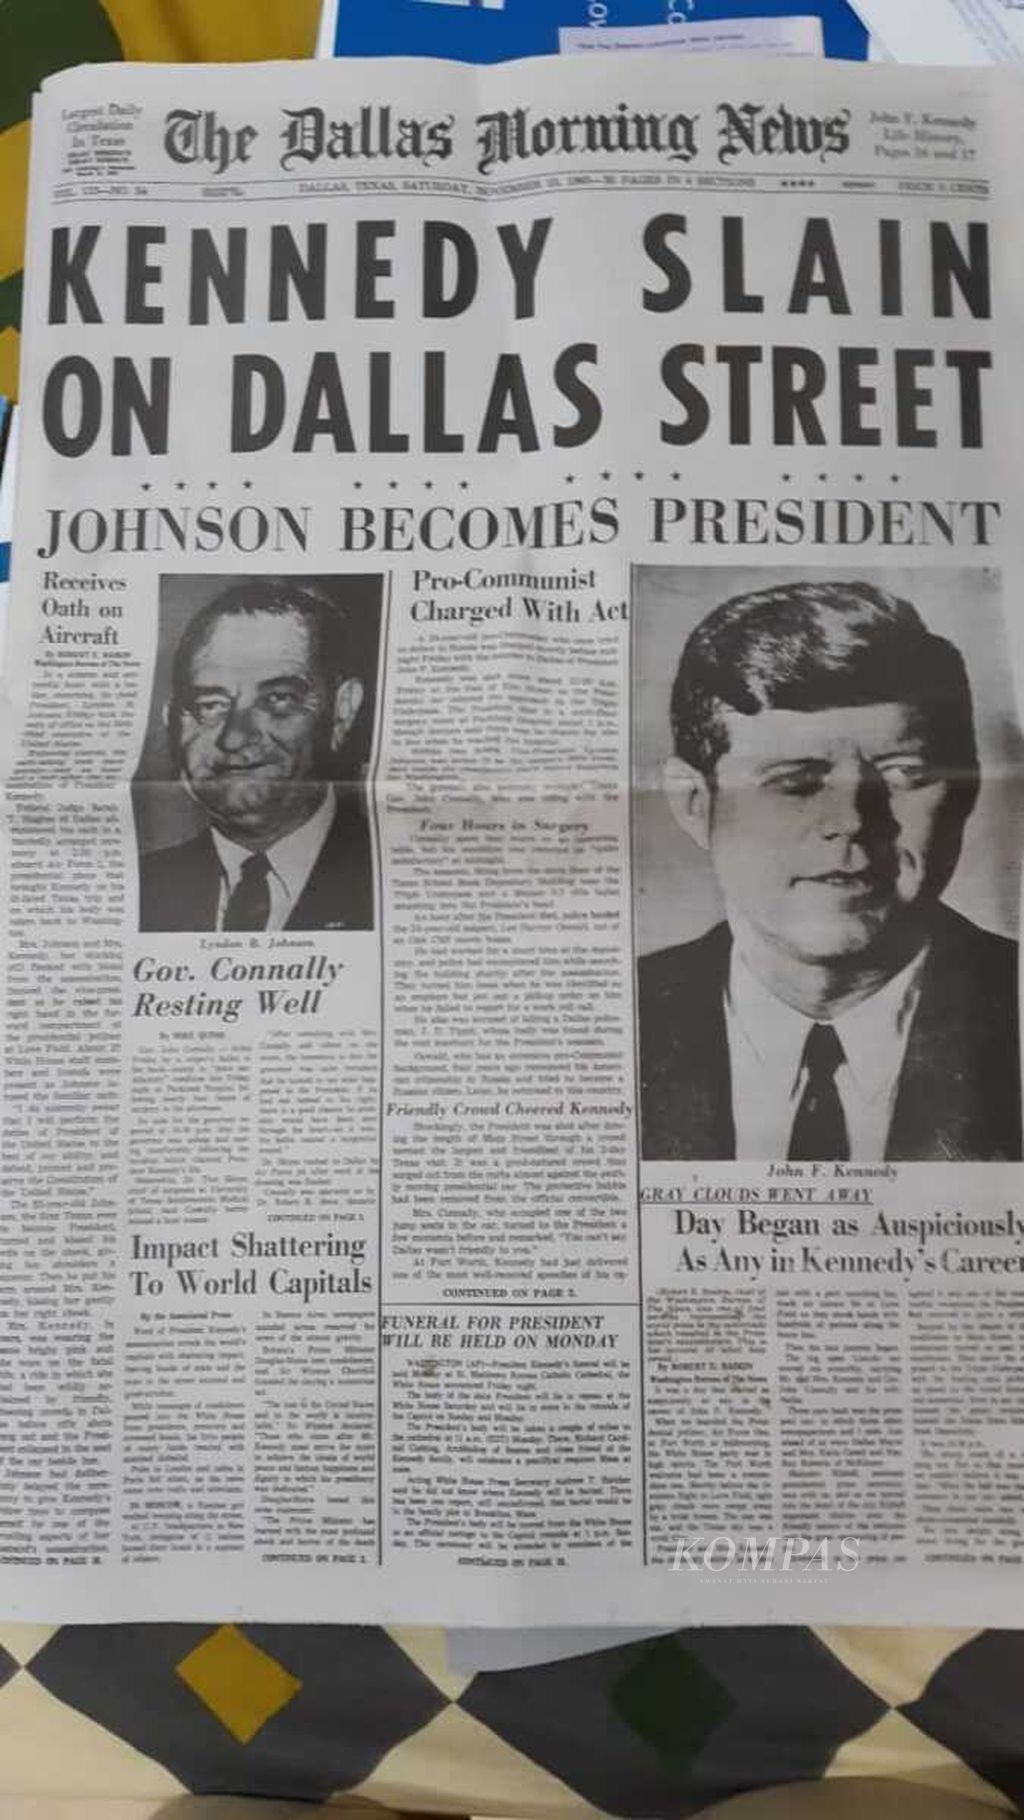 Berita tentang pembunuhan John Kennedy di salah satu media cetak.